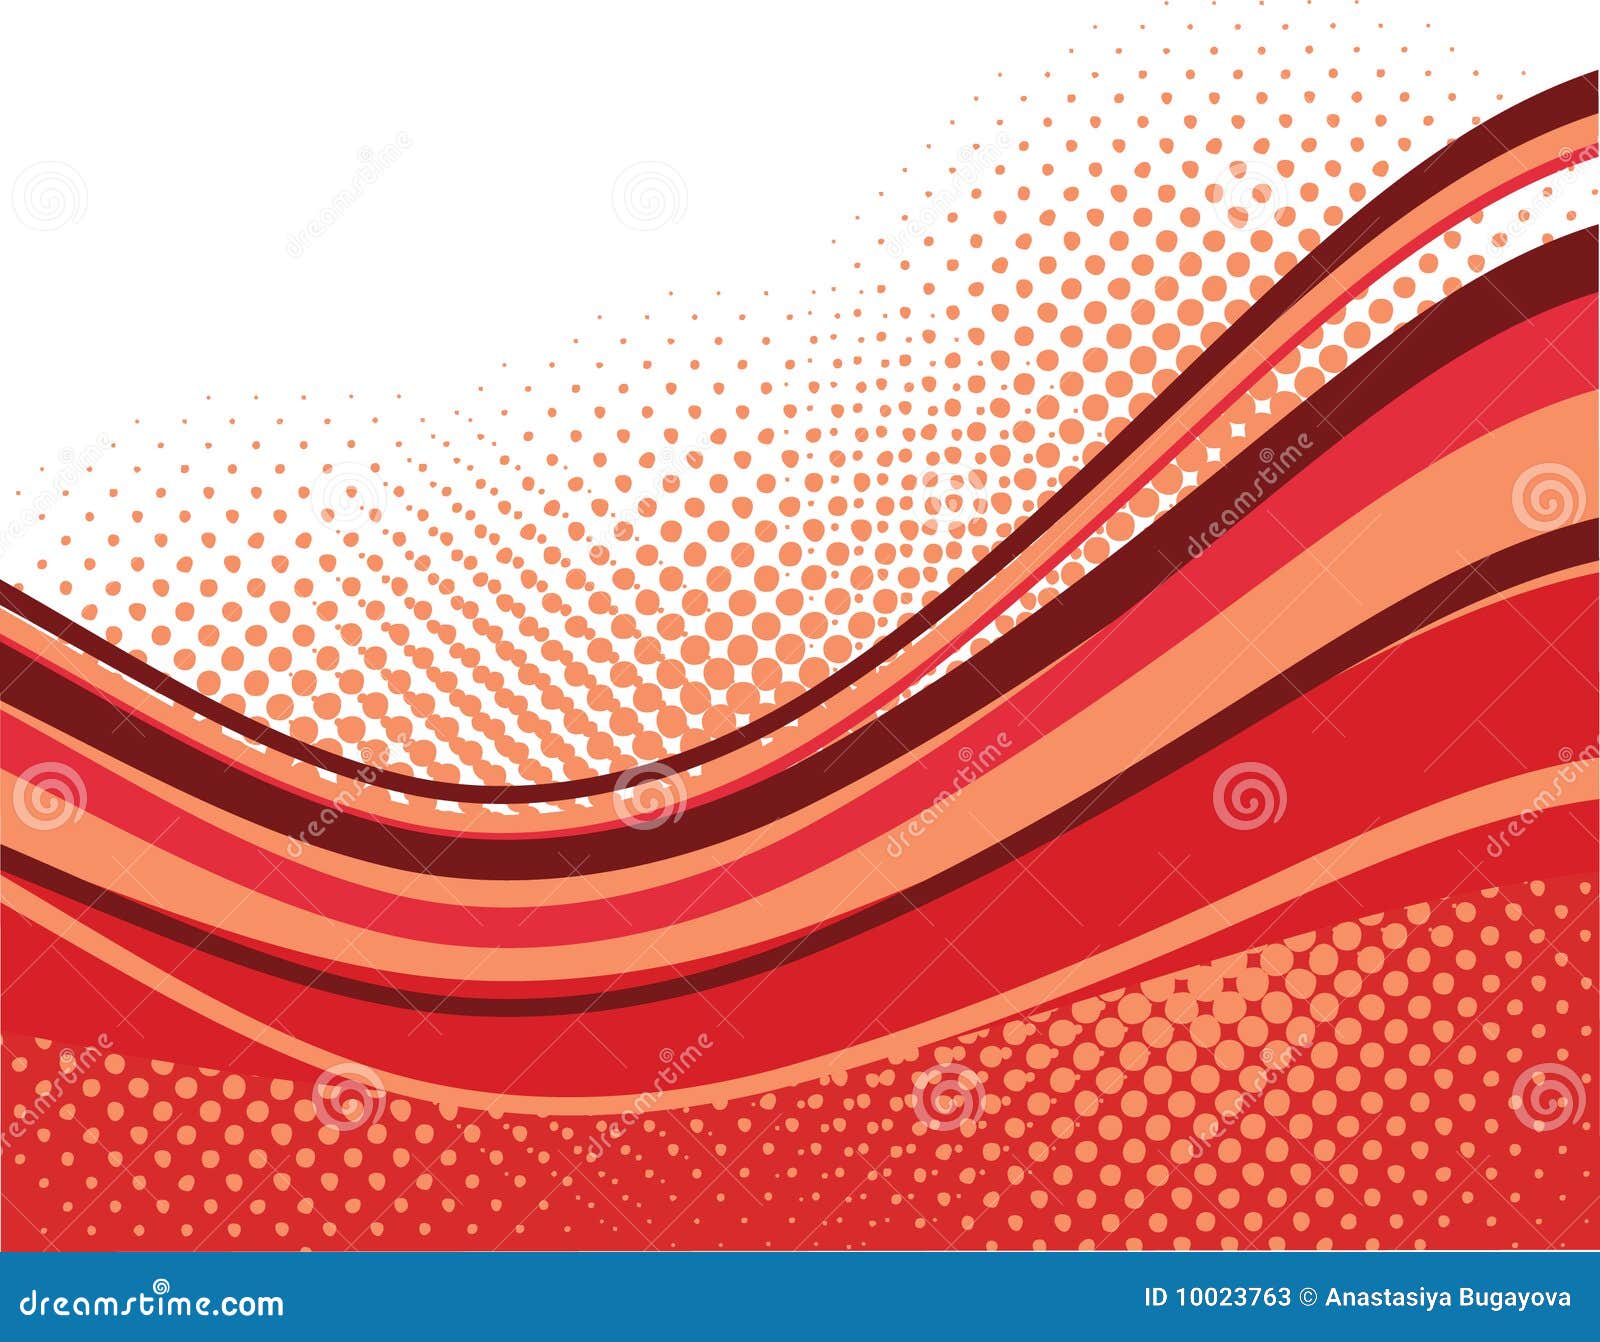 Red waves background stock vector. Illustration of frame - 10023763